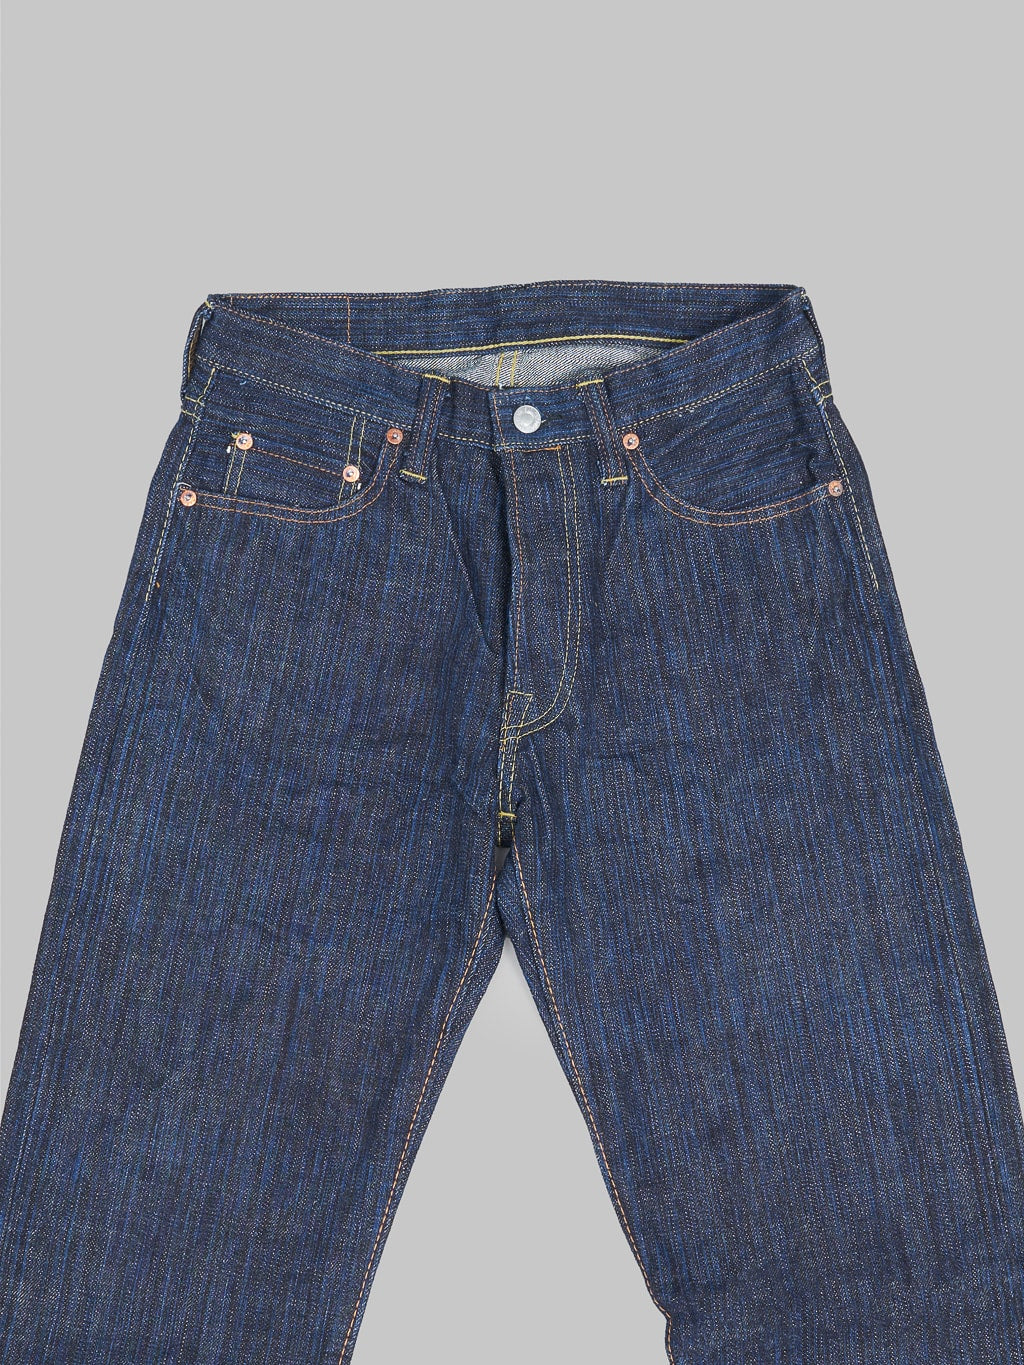 The Strike Gold 8104 Shower Slub jeans waist